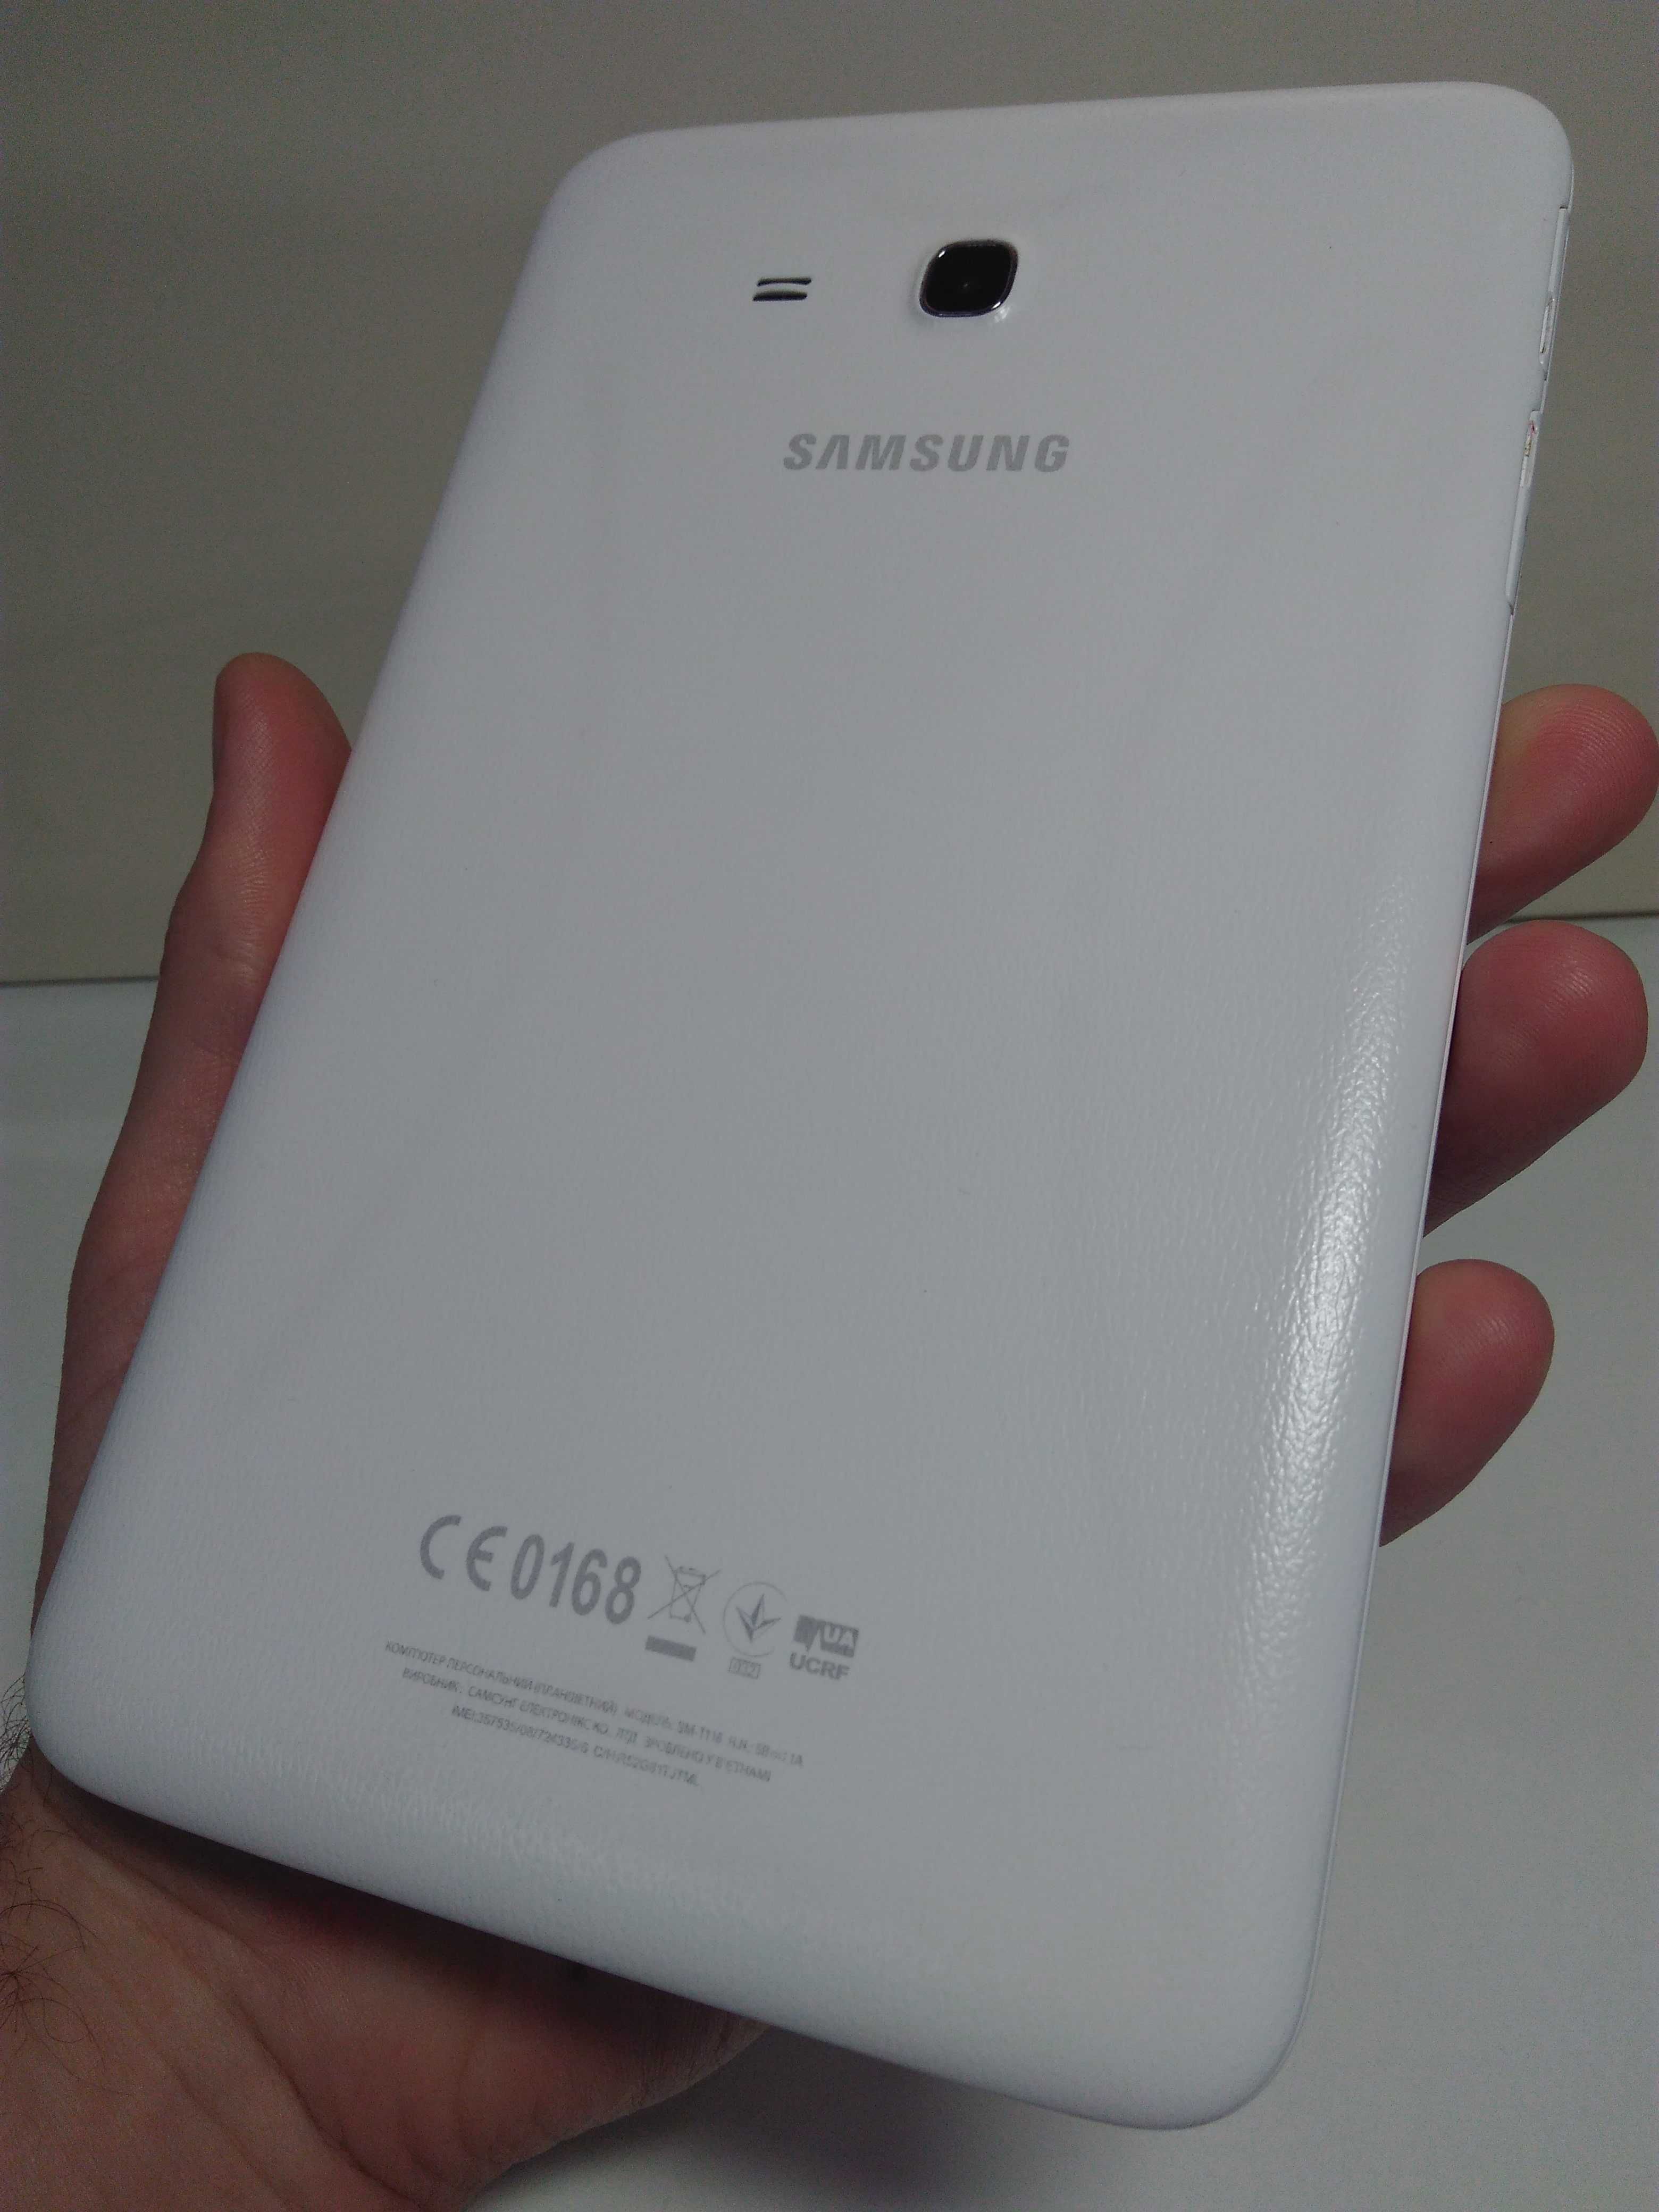 Планшет-телефон Samsung Galaxy. Оригинал 3G с чехлом